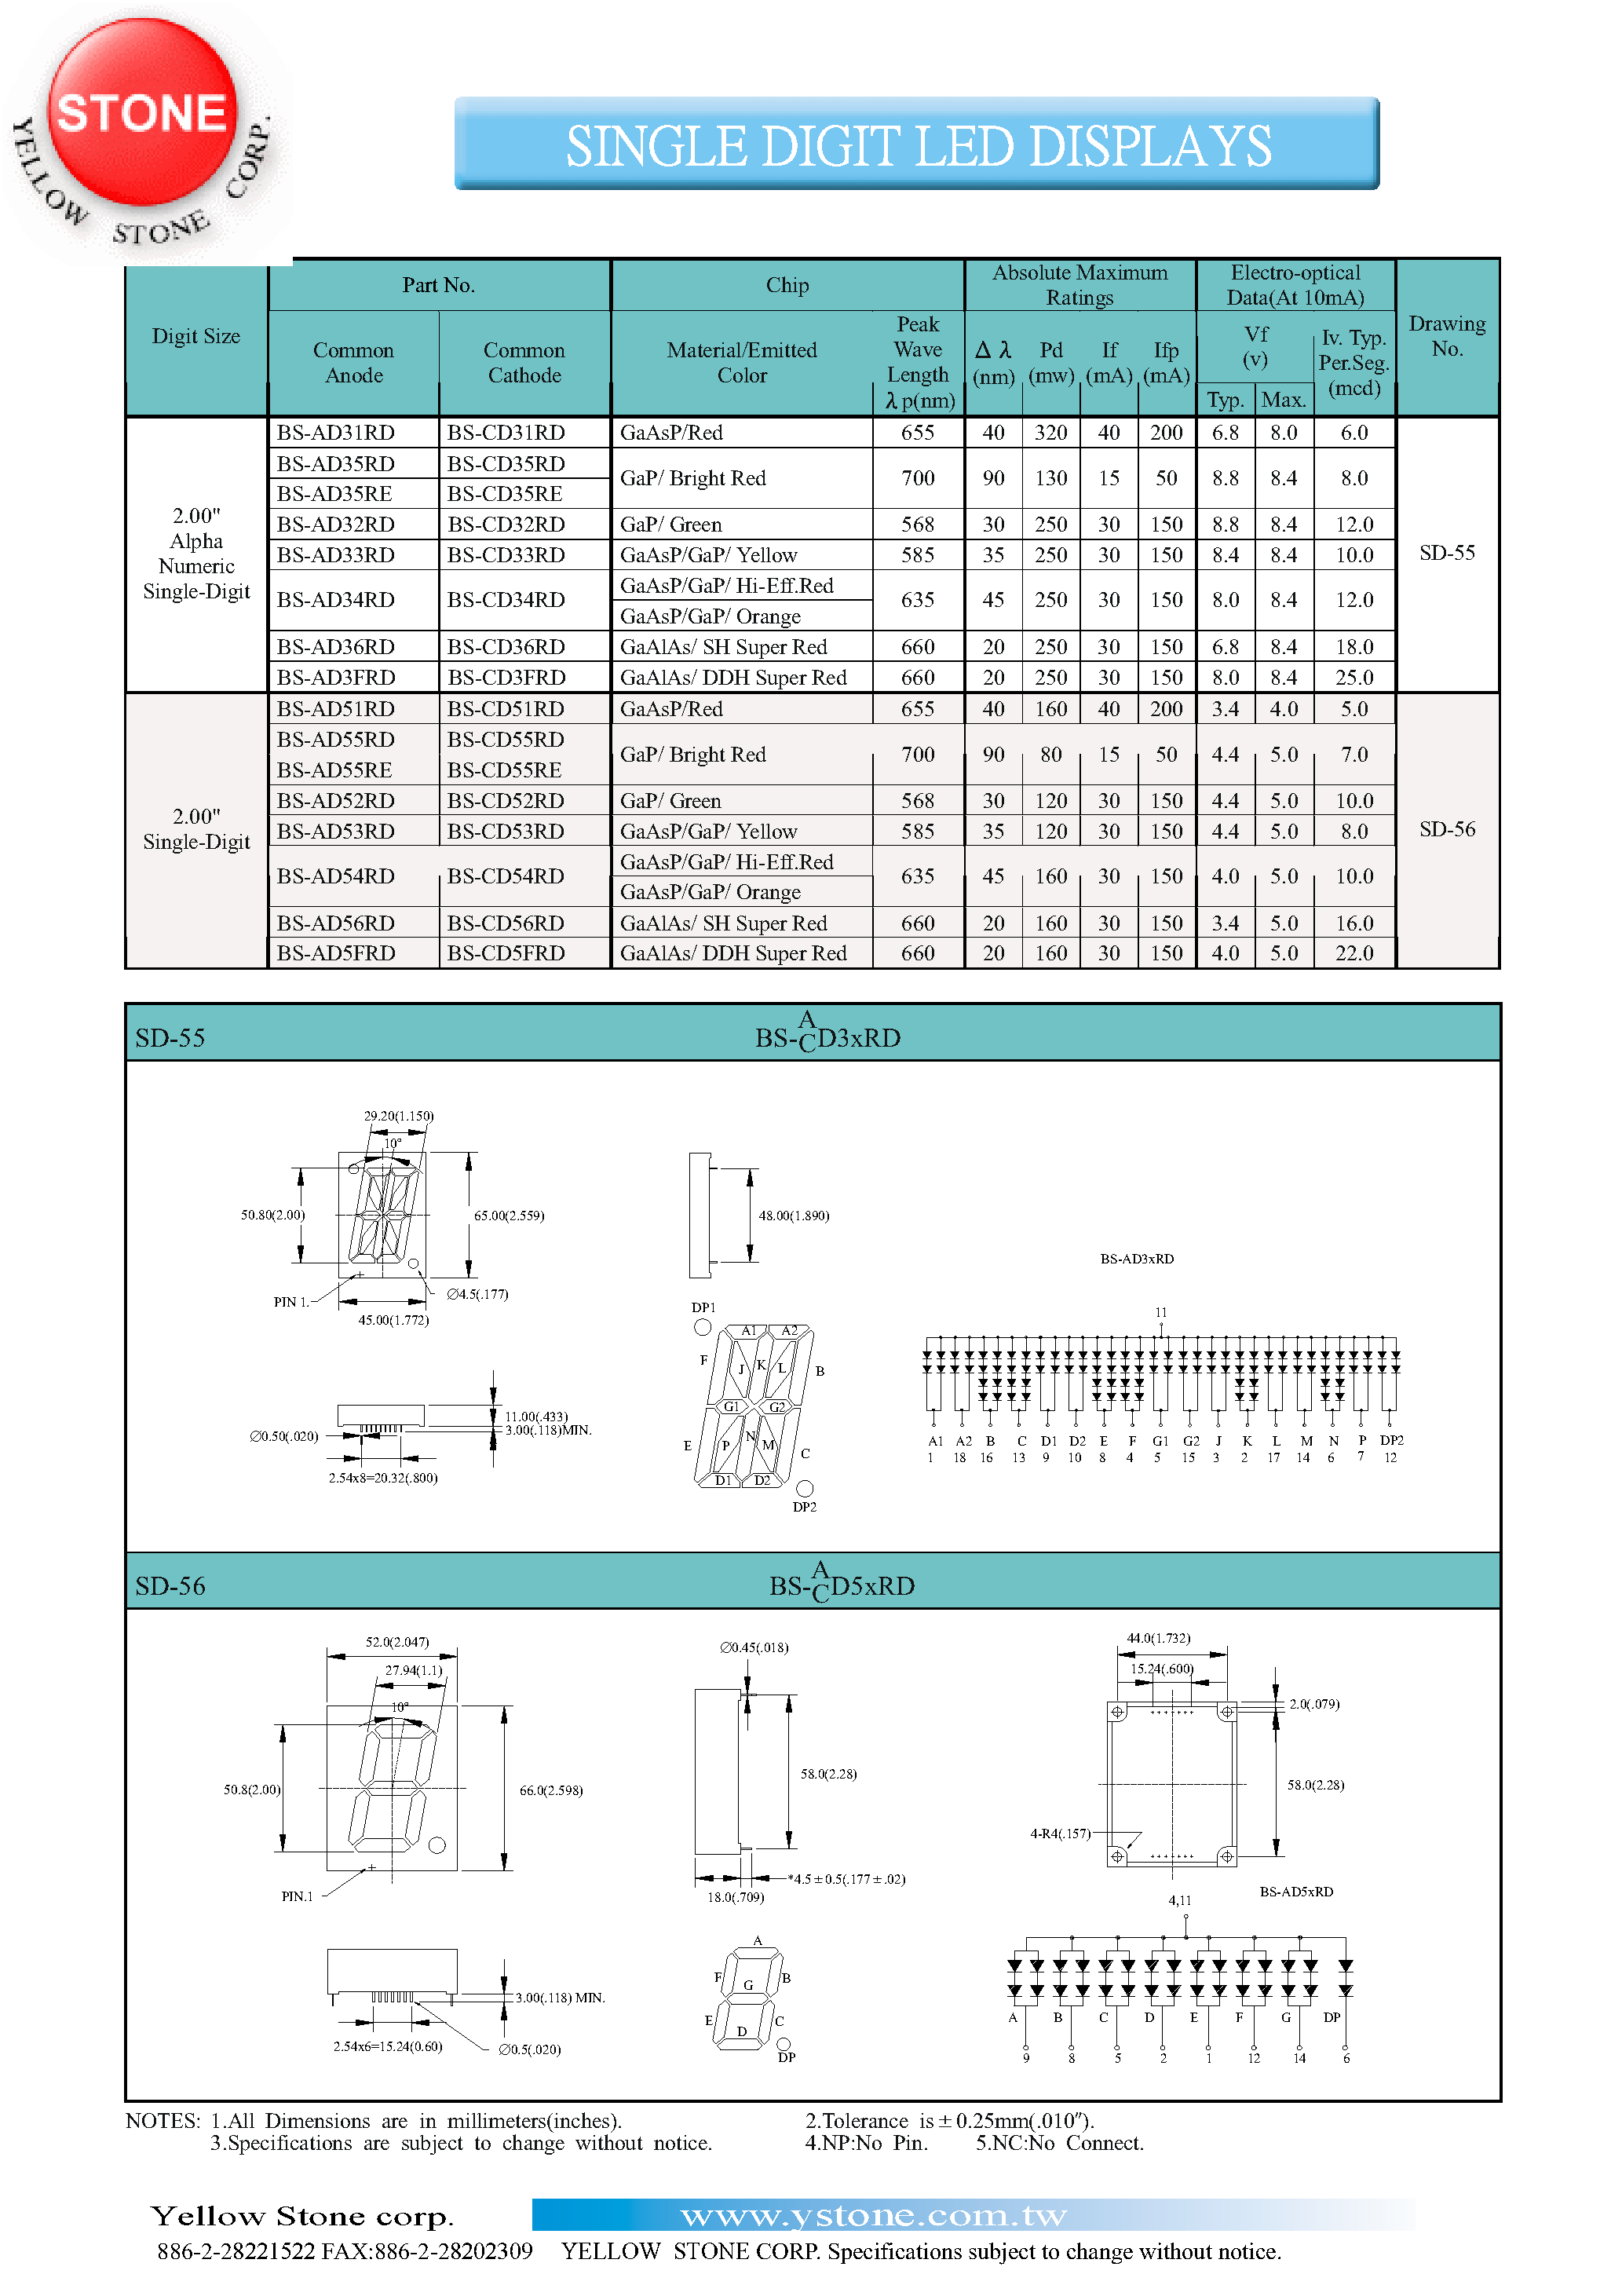 Datasheet BS-AD55RD - SINGLE DIGIT LED DISPLAYS page 1